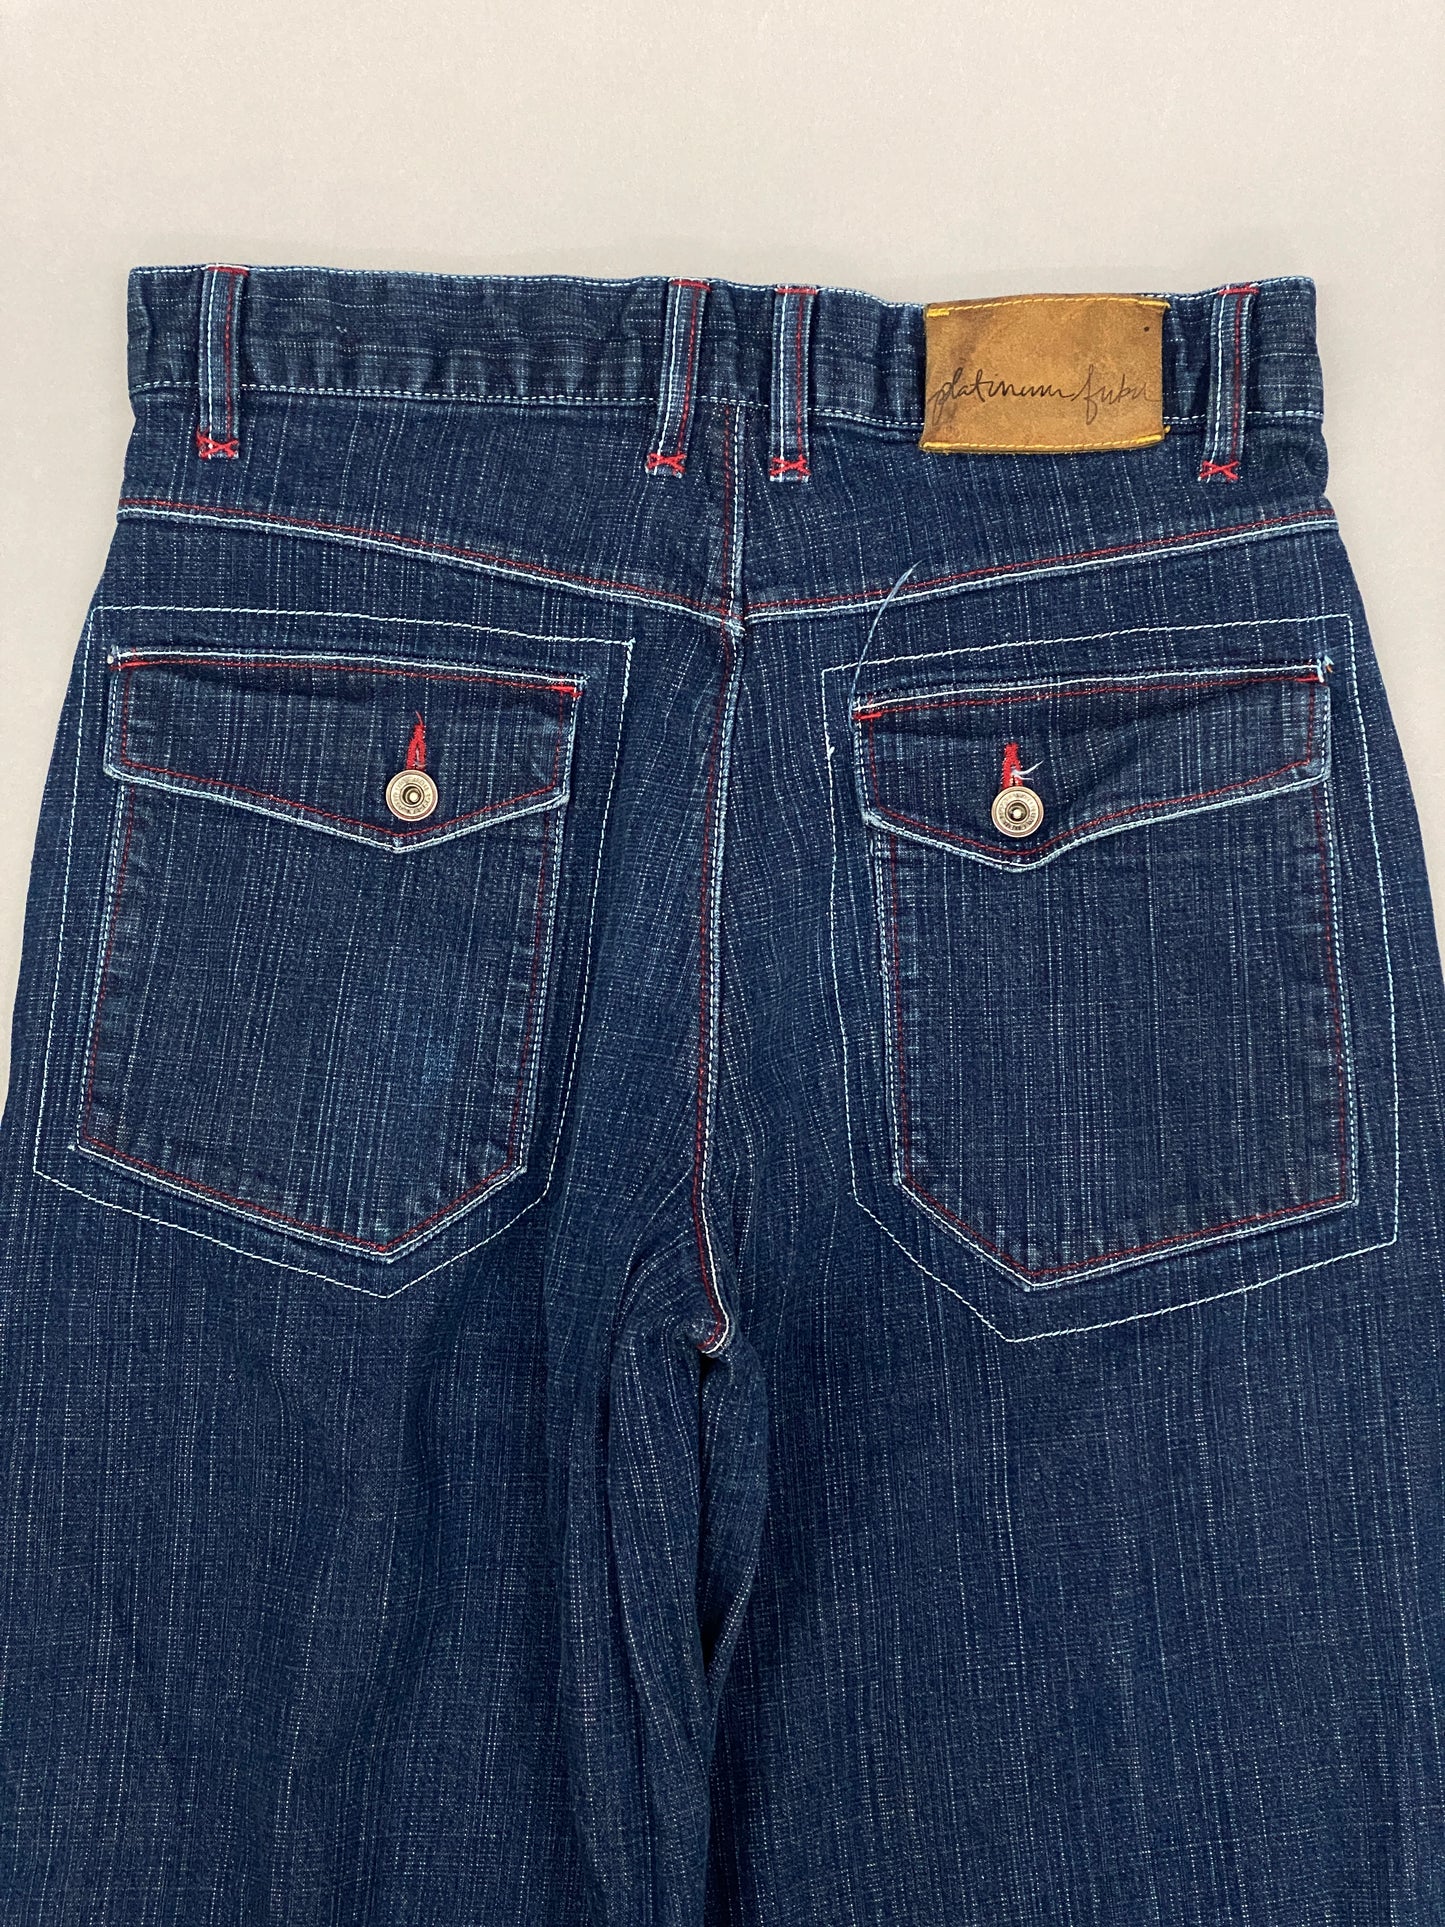 Fubu Platinum Fat Albert Vintage Jeans - 34